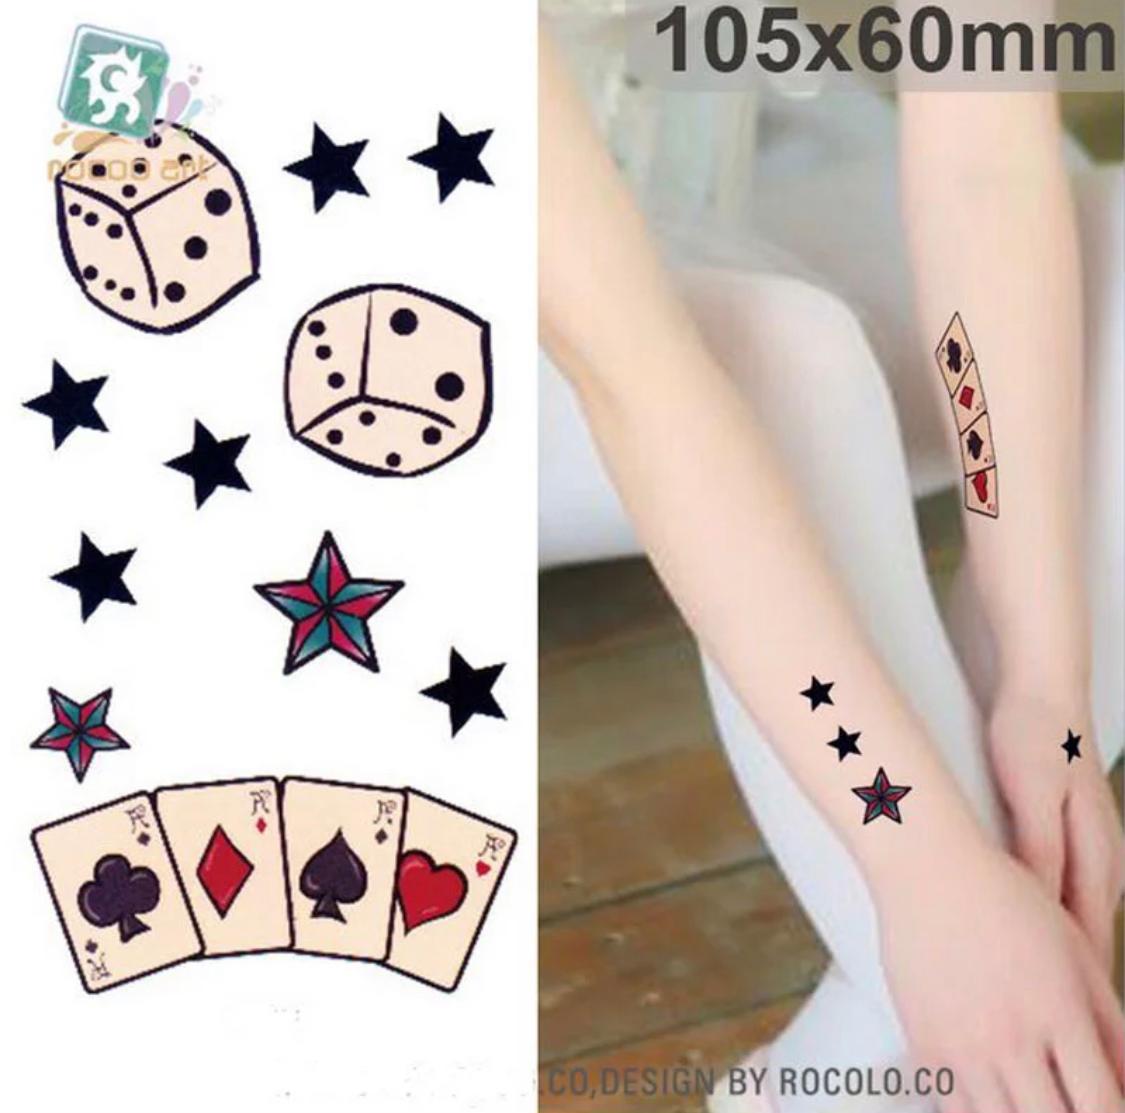  Classical Poker Pattern Temporary Tattoo Stickers Body Art Water Proof Tattoo Body Tattoo